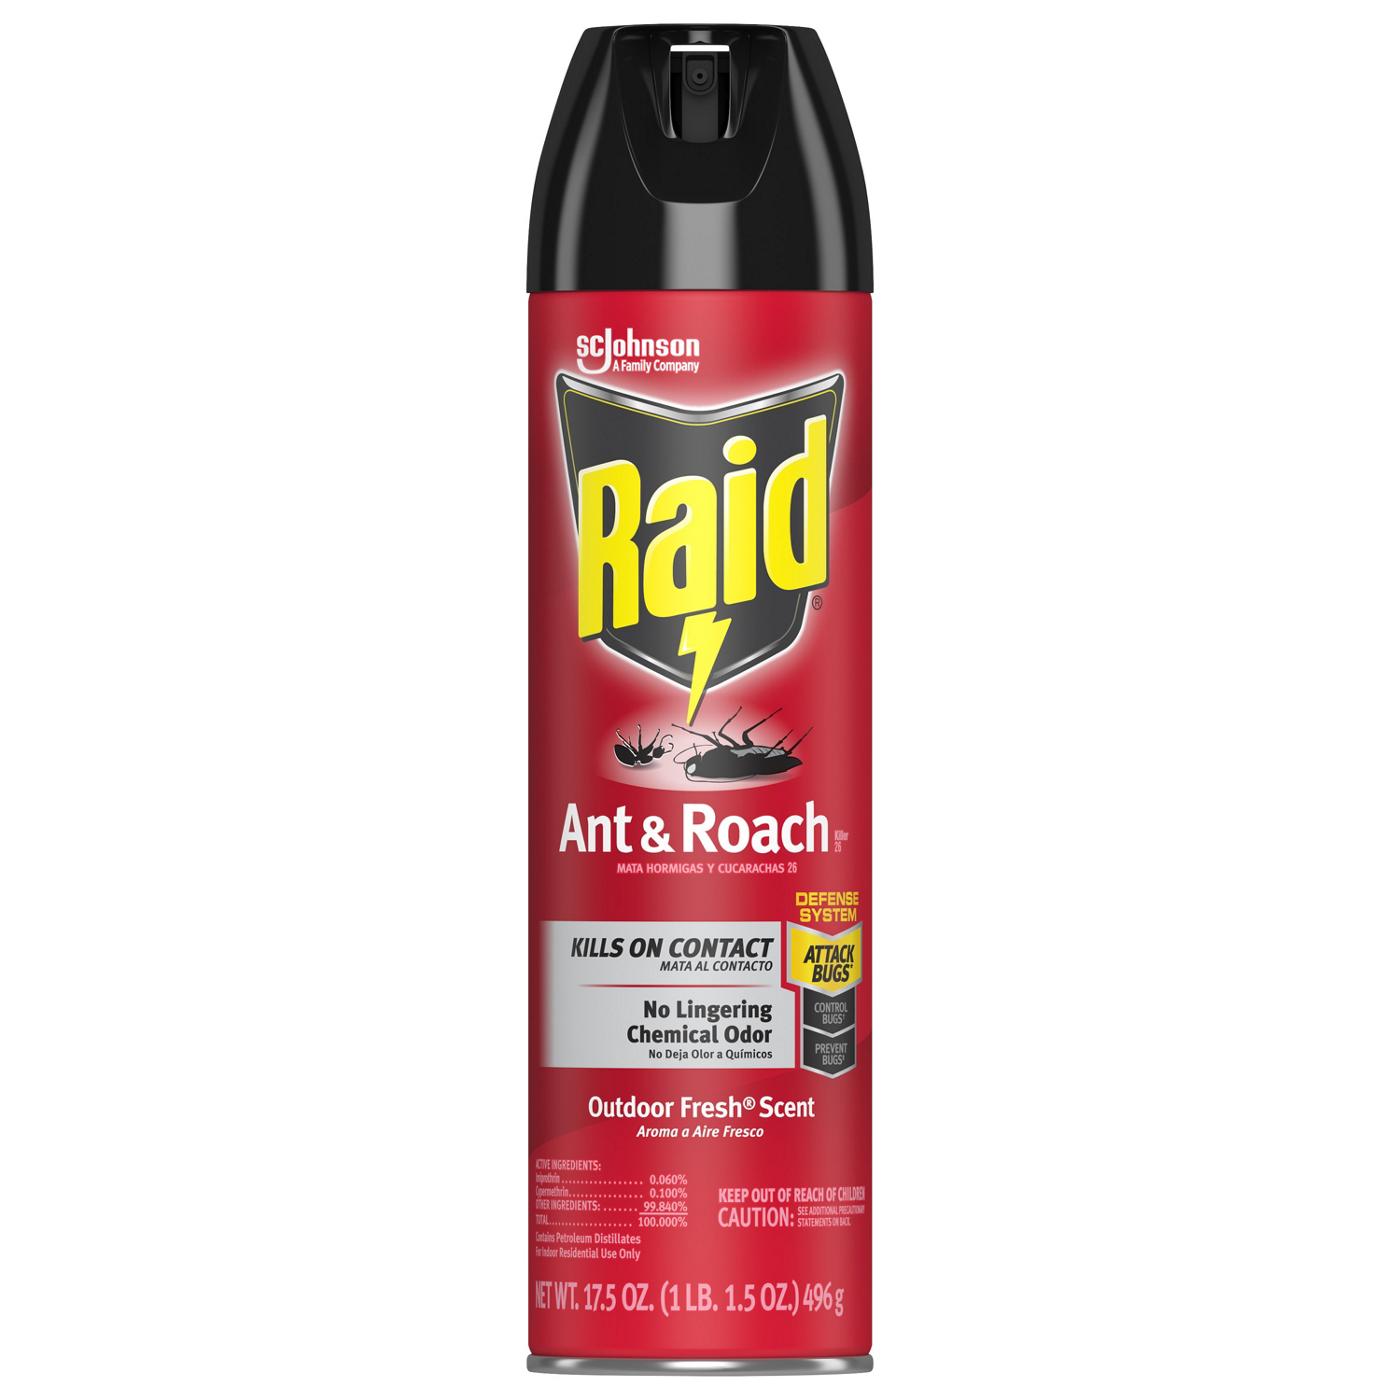 Raid Ant & Roach Killer 26 - Outdoor Fresh; image 1 of 2